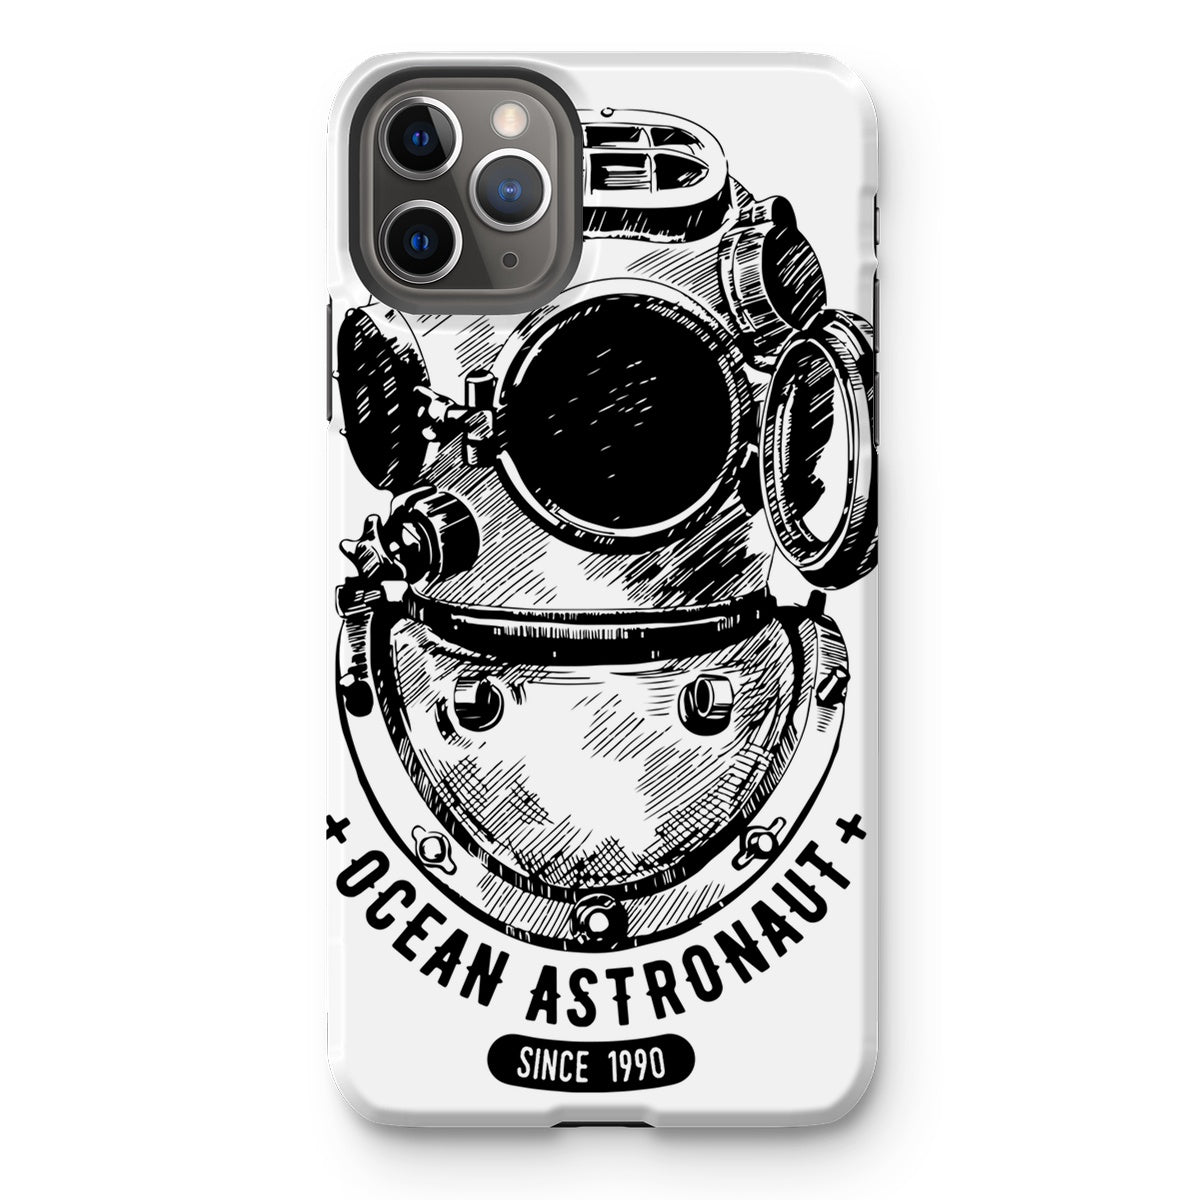 AQUA B&amp;W - 05 - Ozean-Astronaut - Robuste Handyhülle